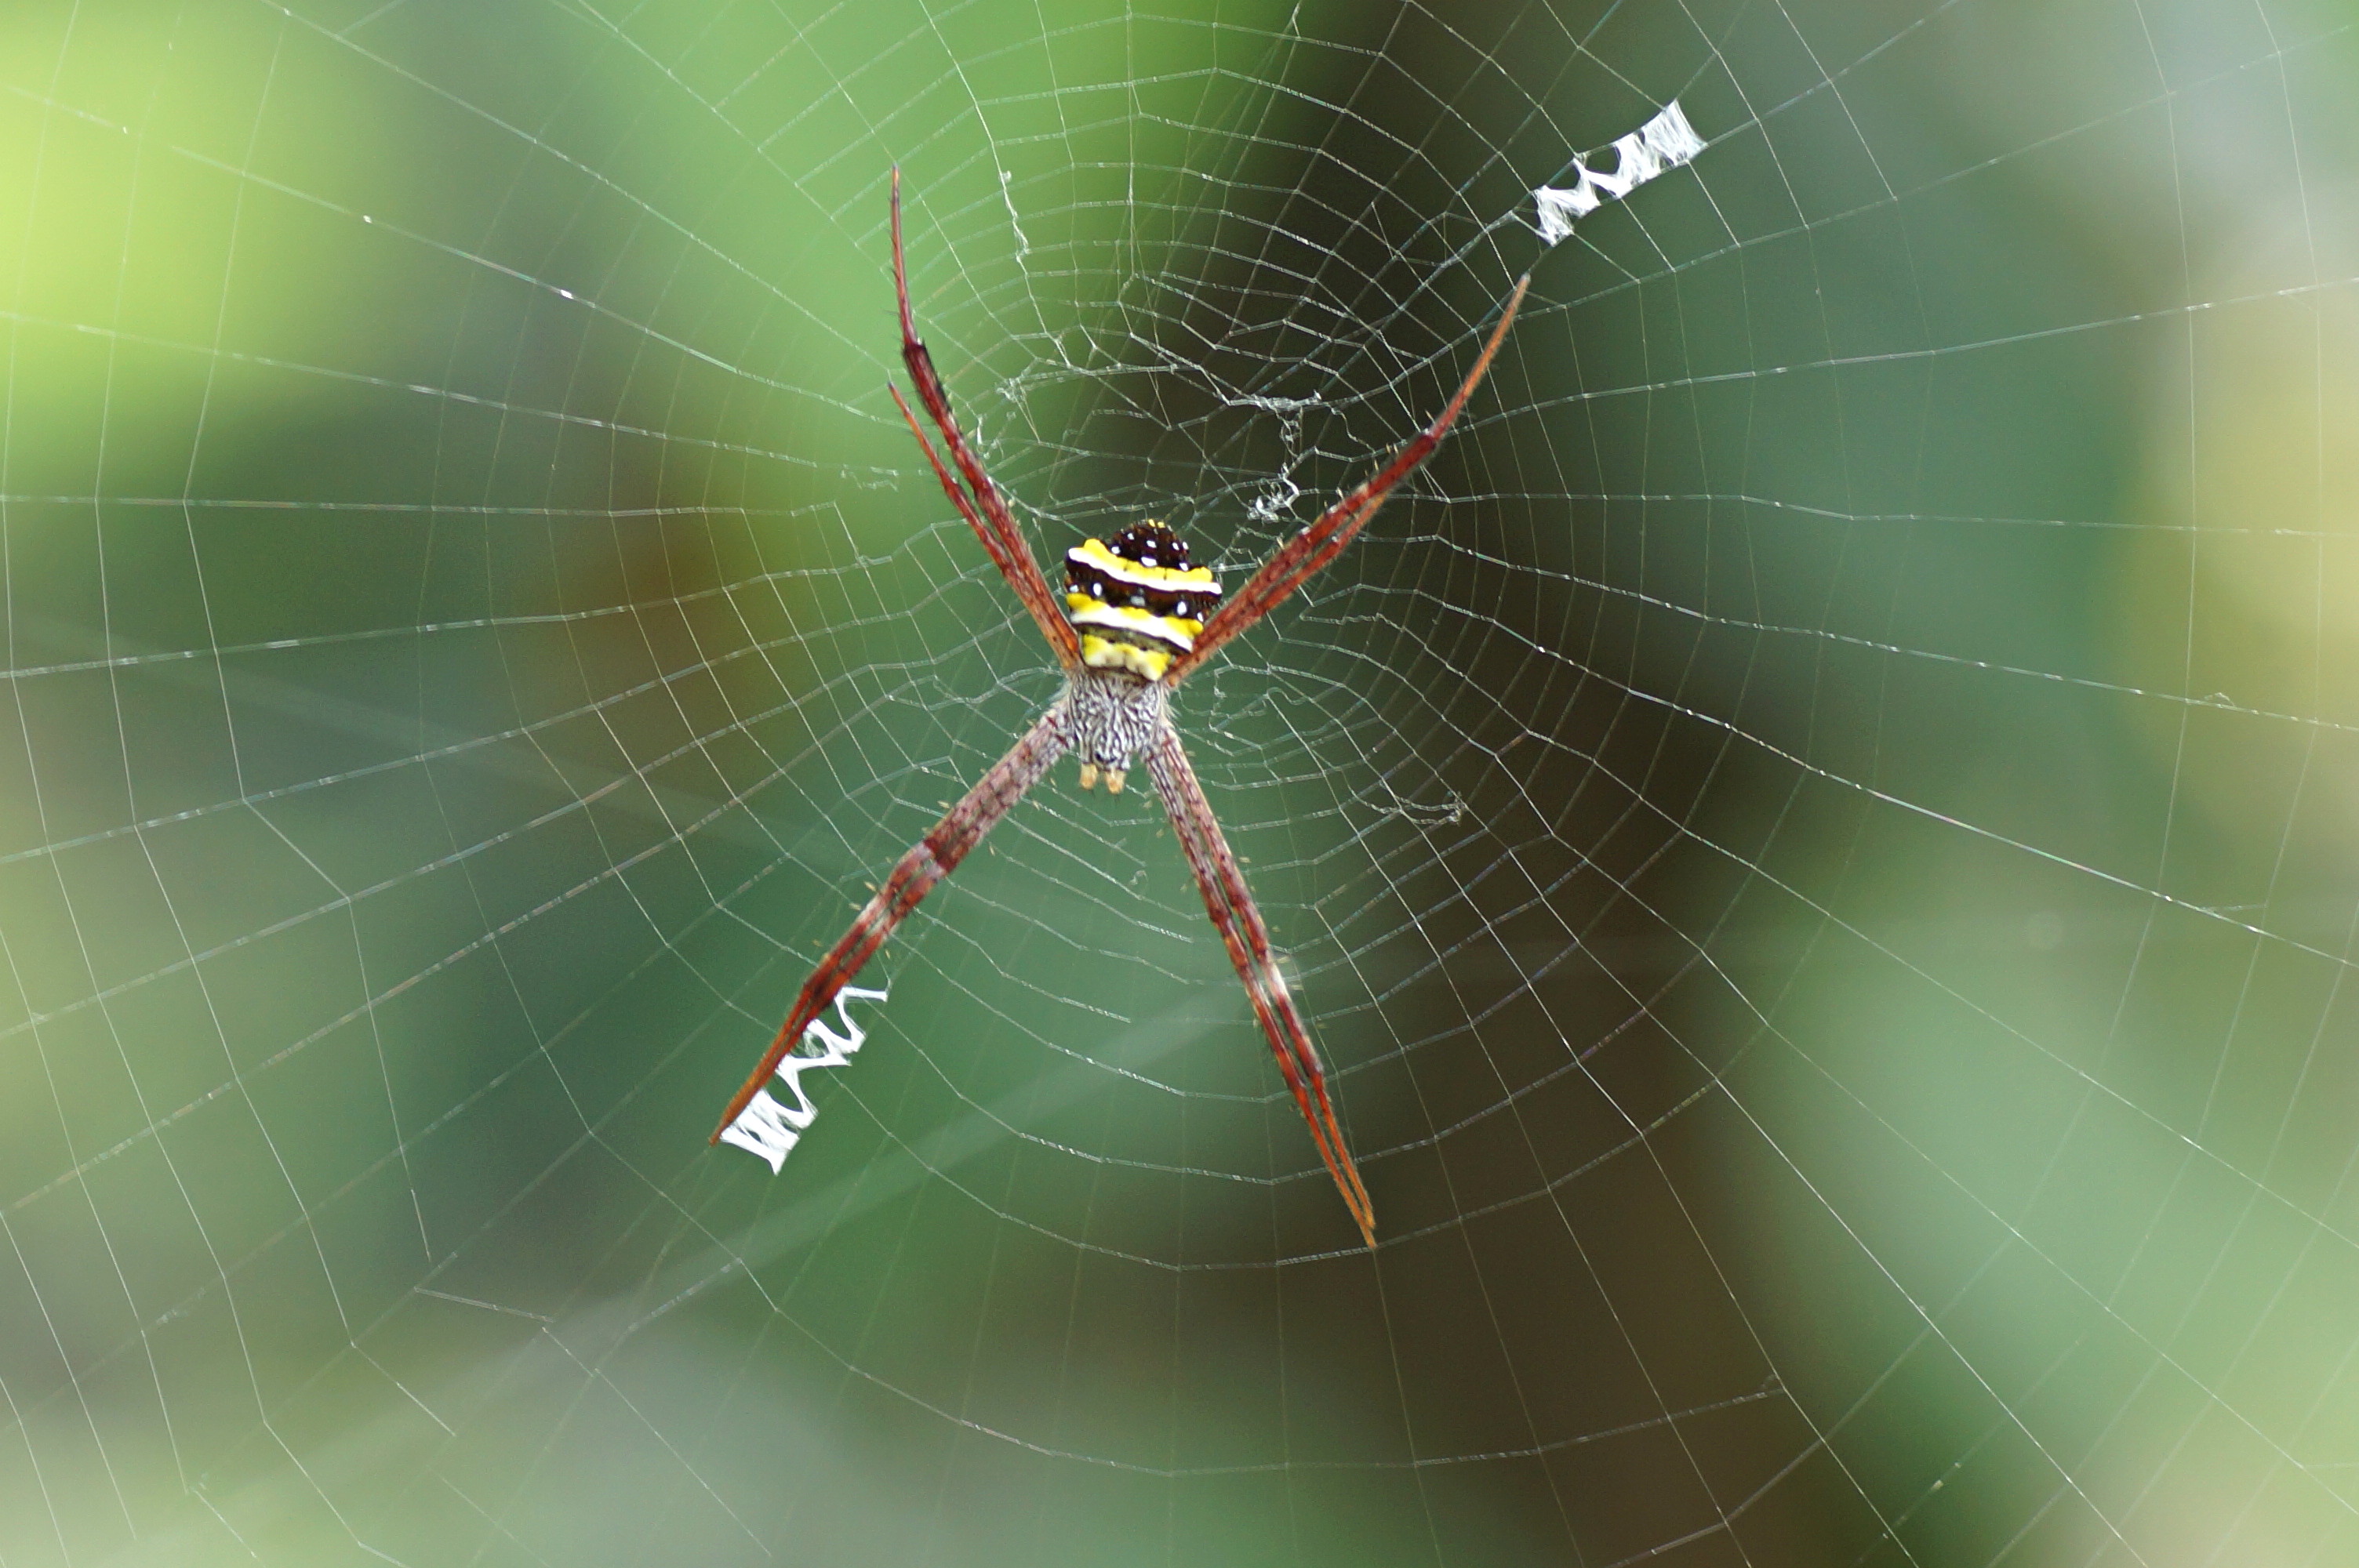 File:Argiope anasuja spider.jpg - Wikipedia